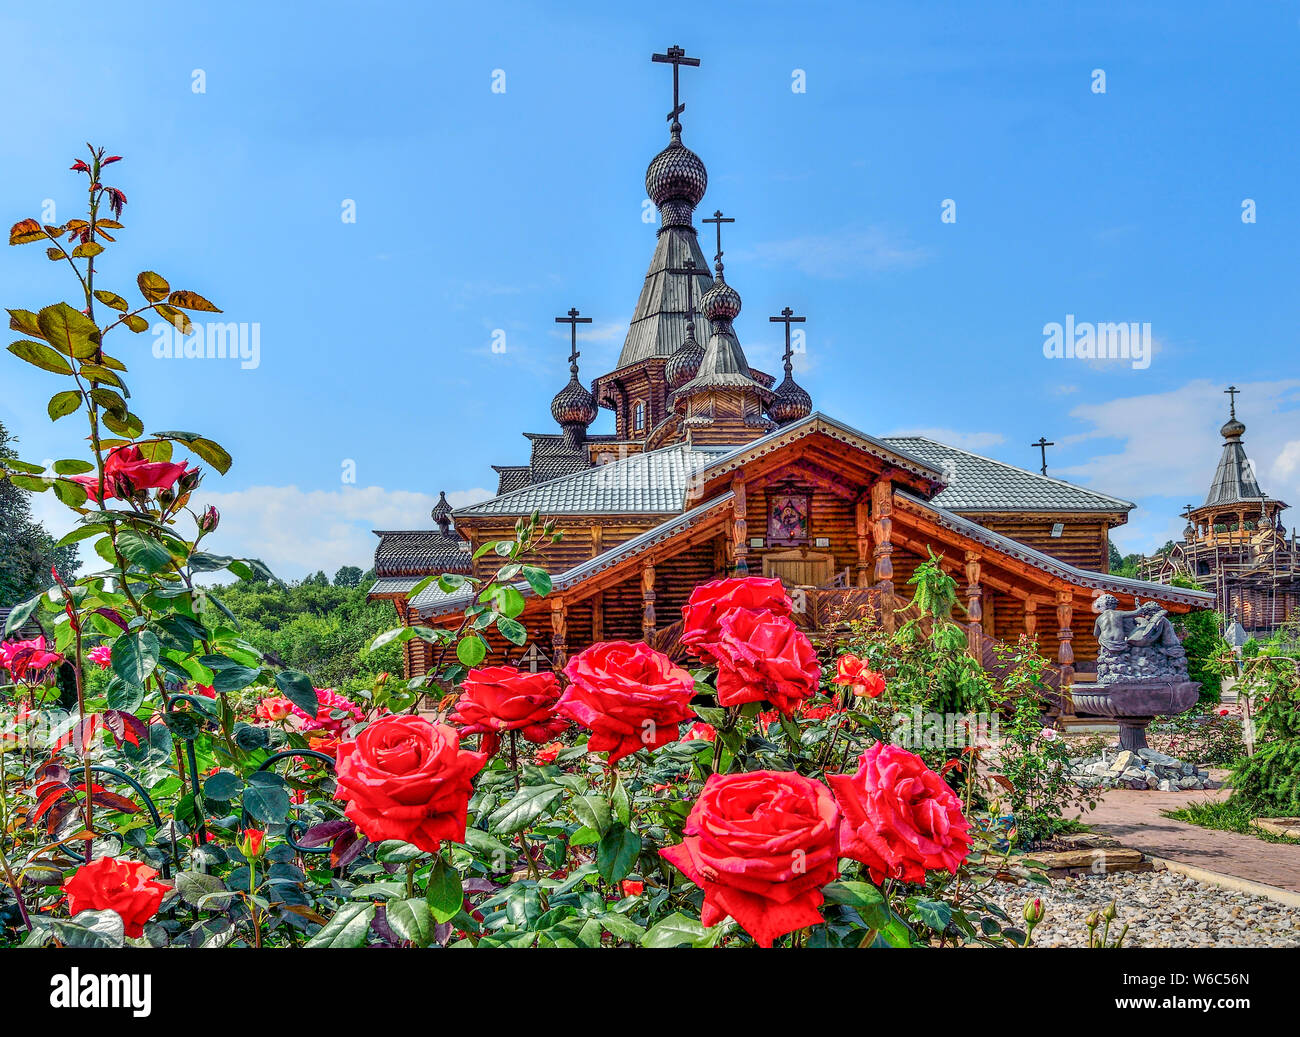 Novokuznetsk, Russia - July 29, 2019: Rose garden on front yard of Christian Temple of the Holy Martyr John the Warrior in Novokuznetsk, Russia. Bliss Stock Photo